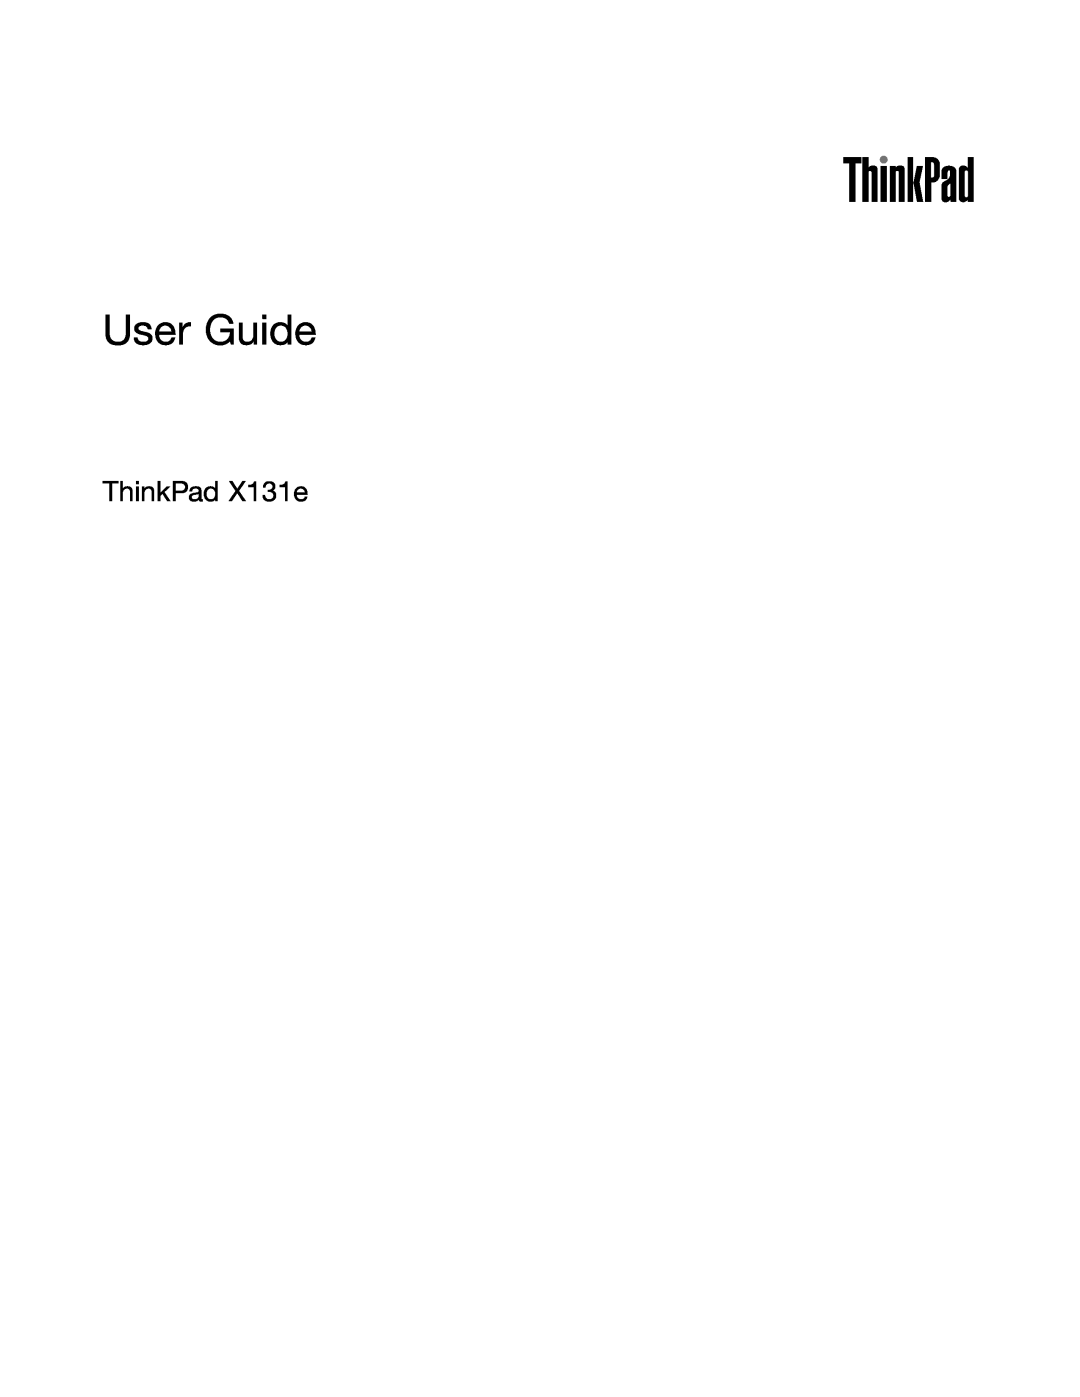 Lenovo X131E manual User Guide, ThinkPad X131e 